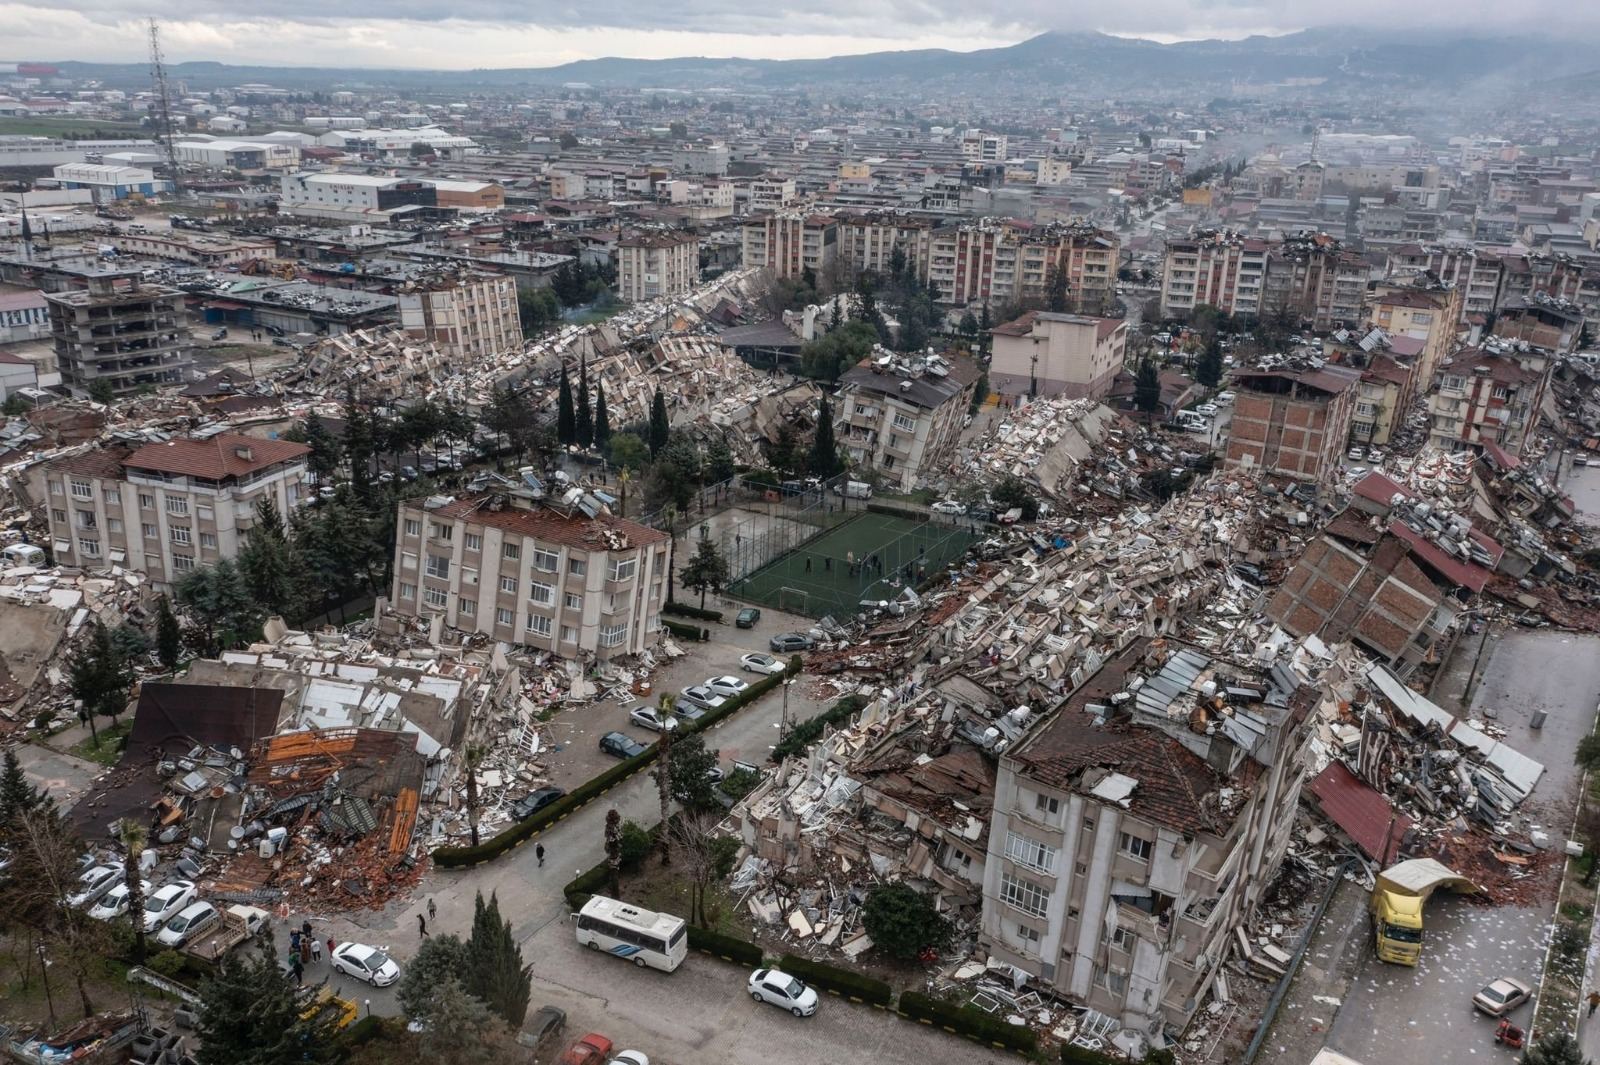 Türkiye earthquake death toll rises to 12,391